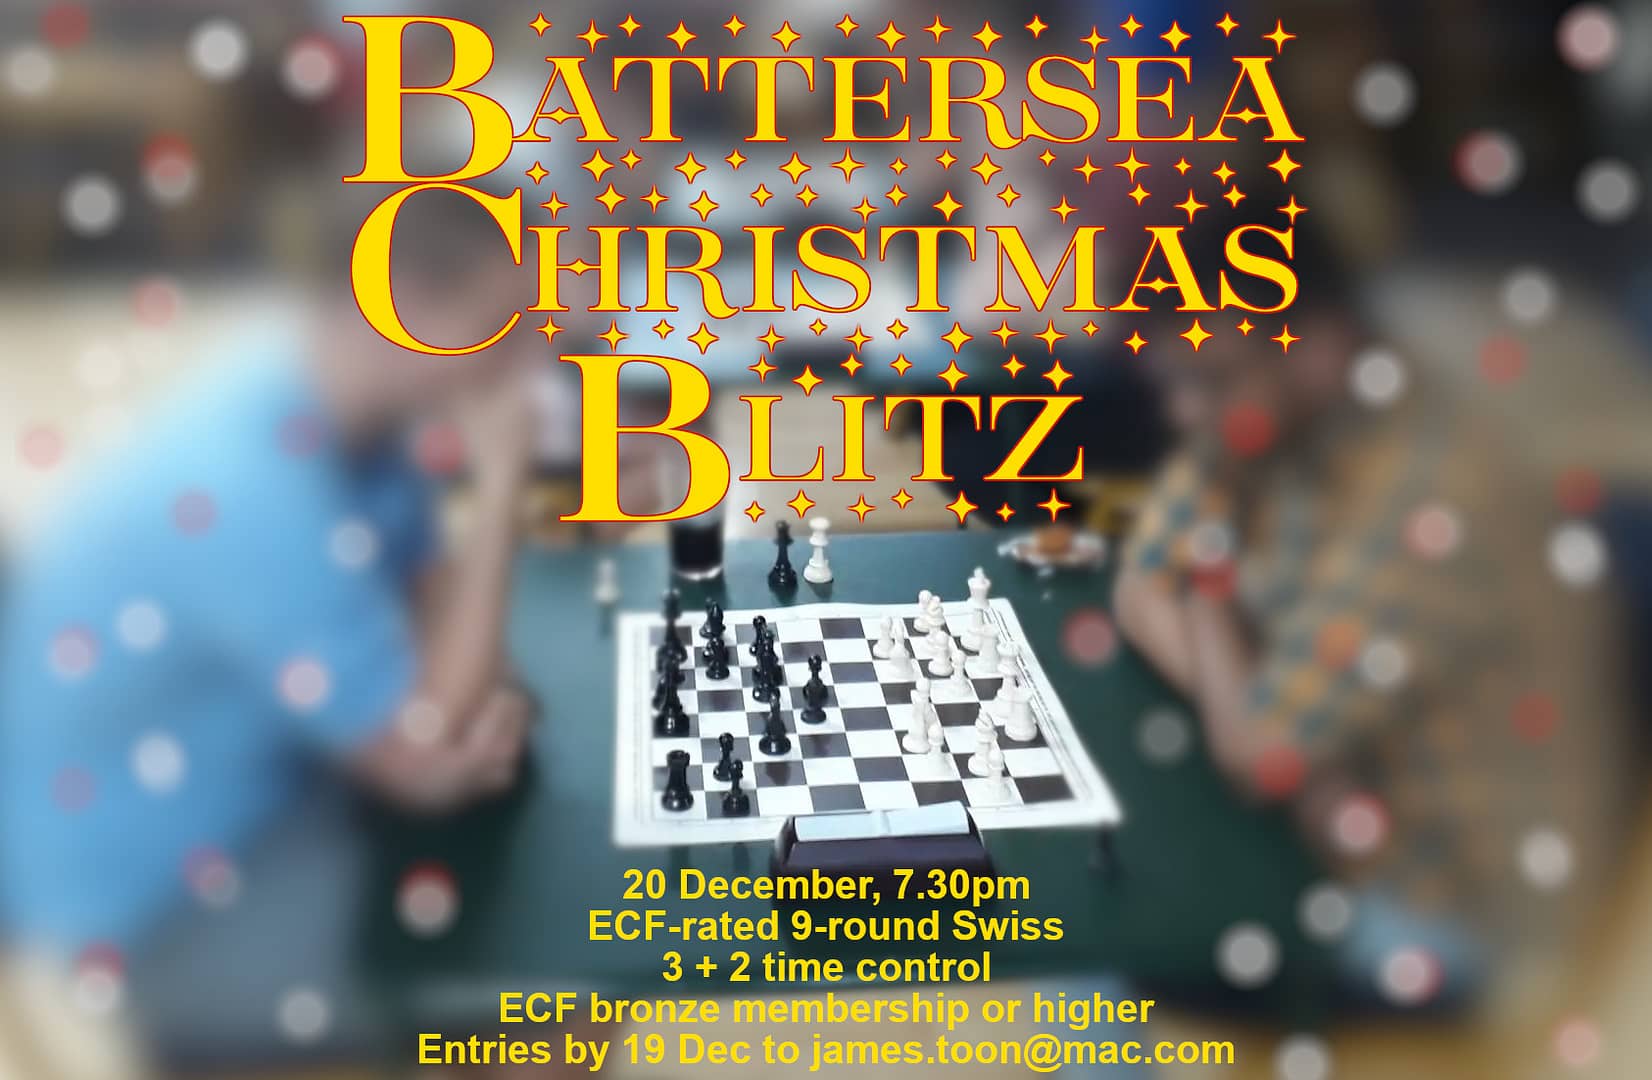 It’ll be a cracker! The Battersea Christmas Blitz